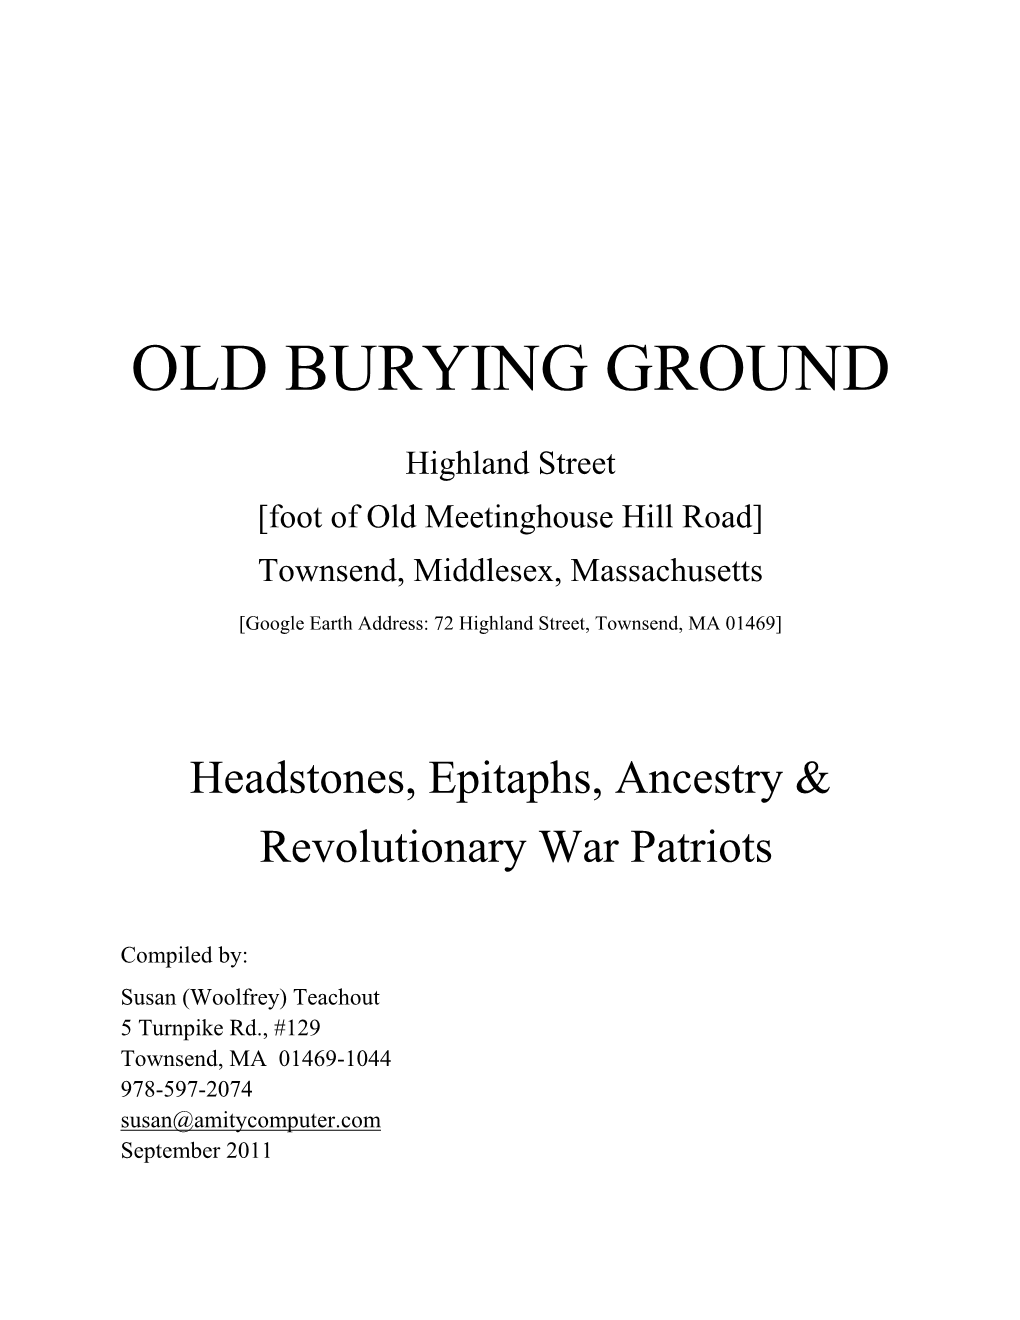 Old Burying Ground Headstones